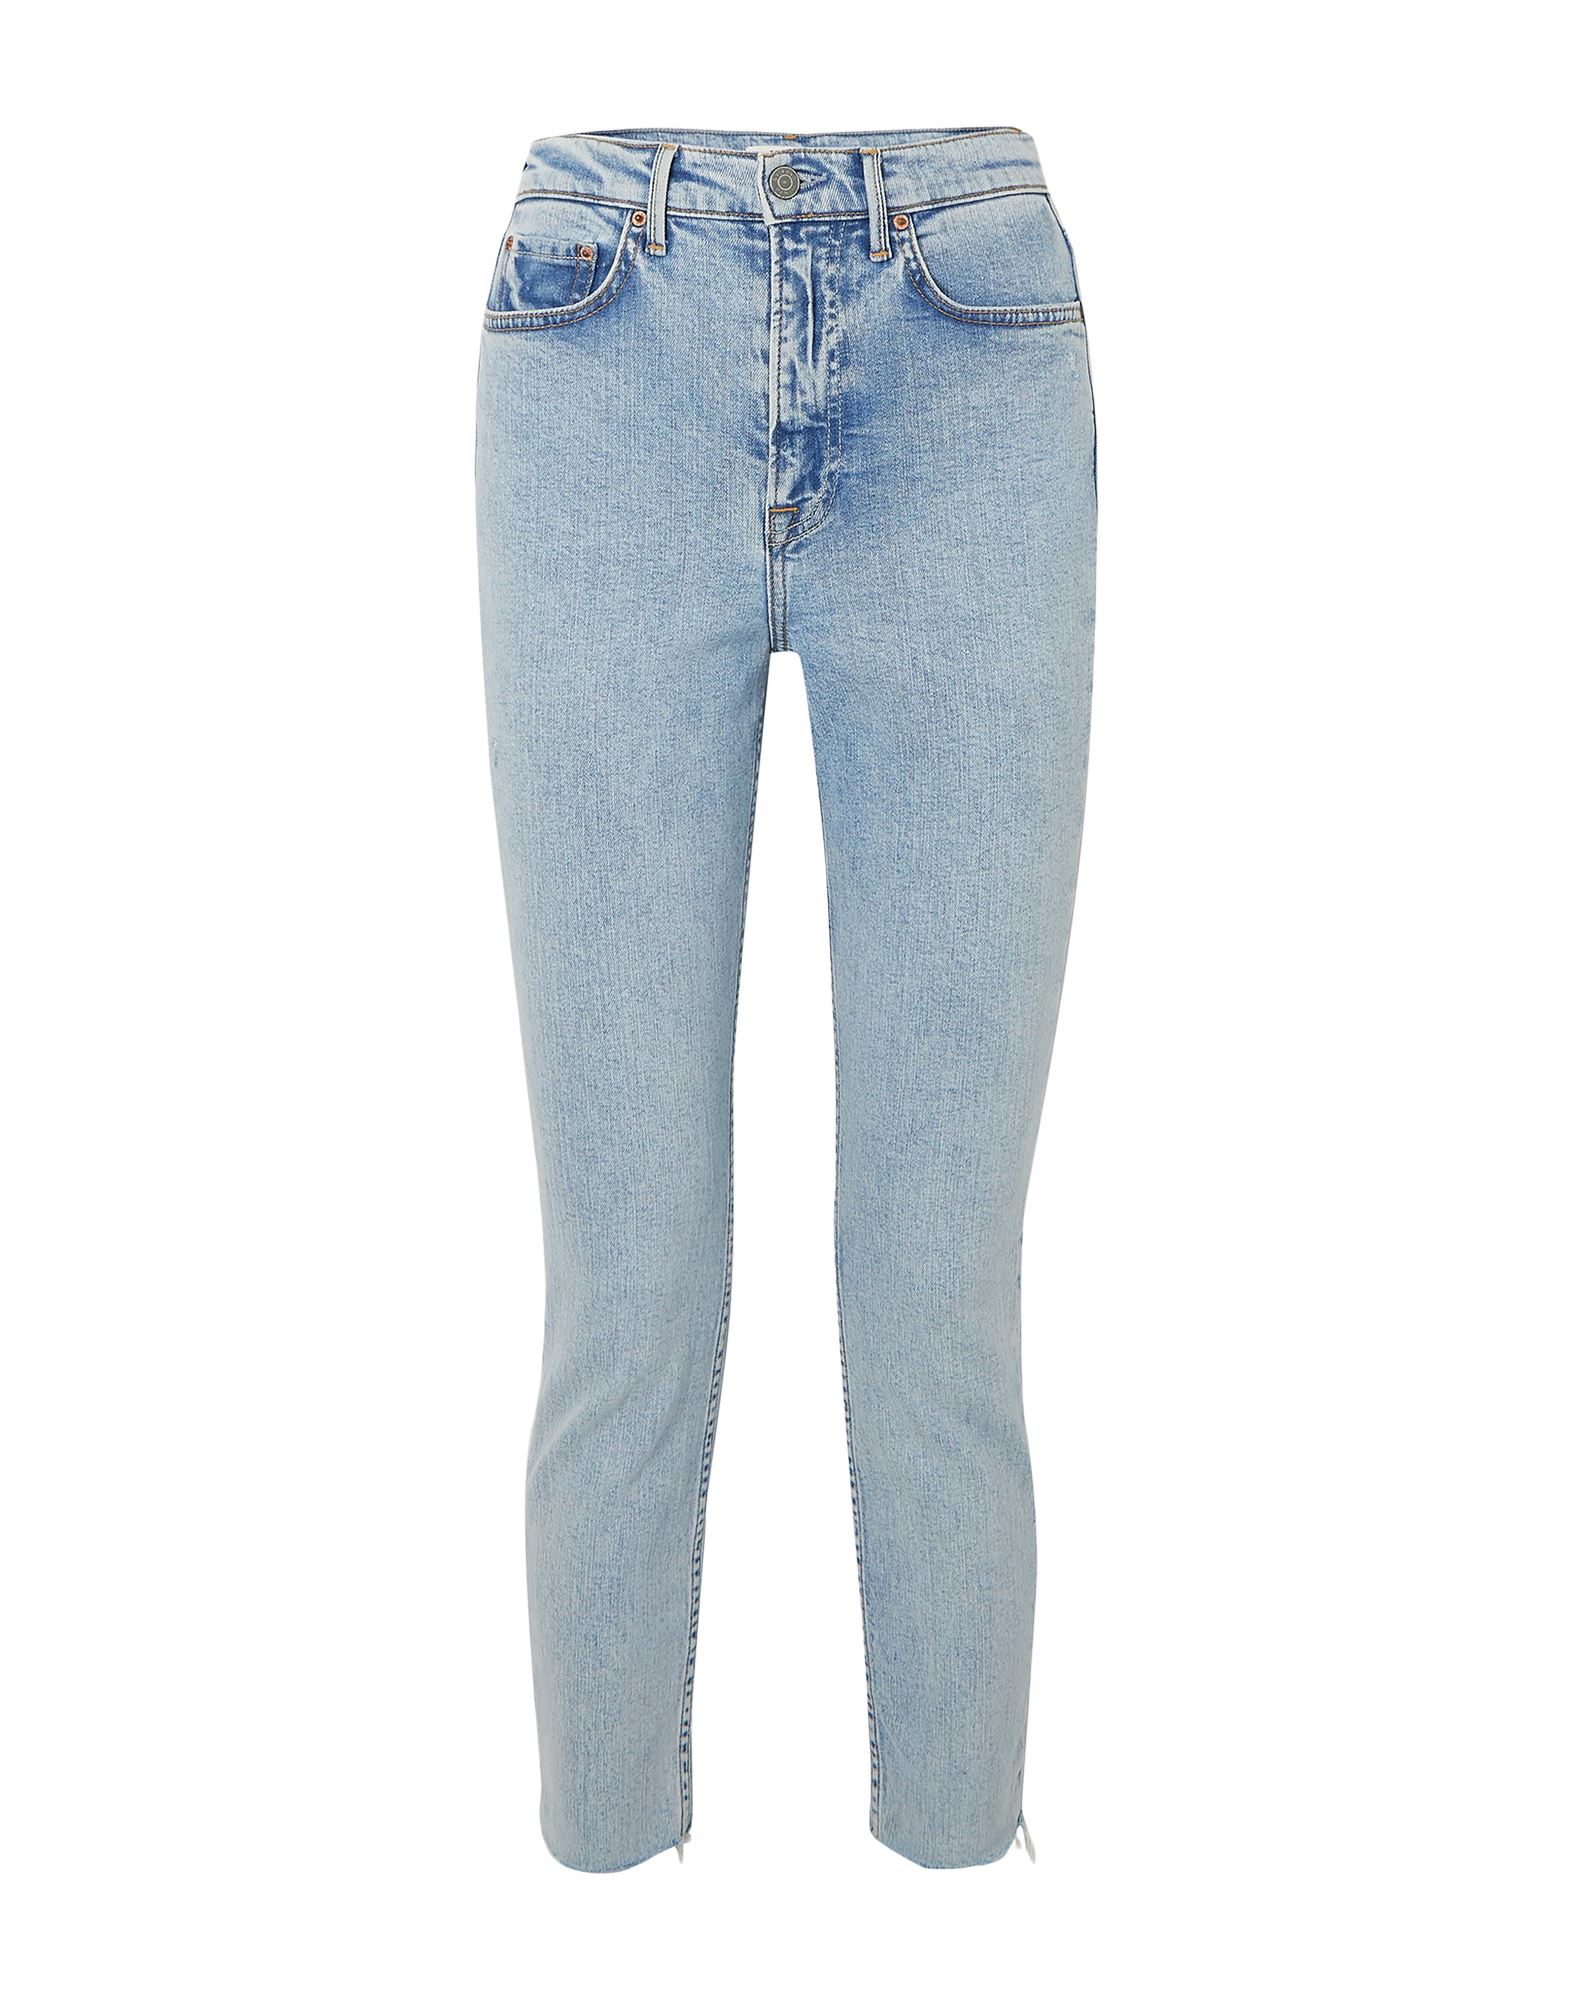 GRLFRND Jeans | Smart Closet